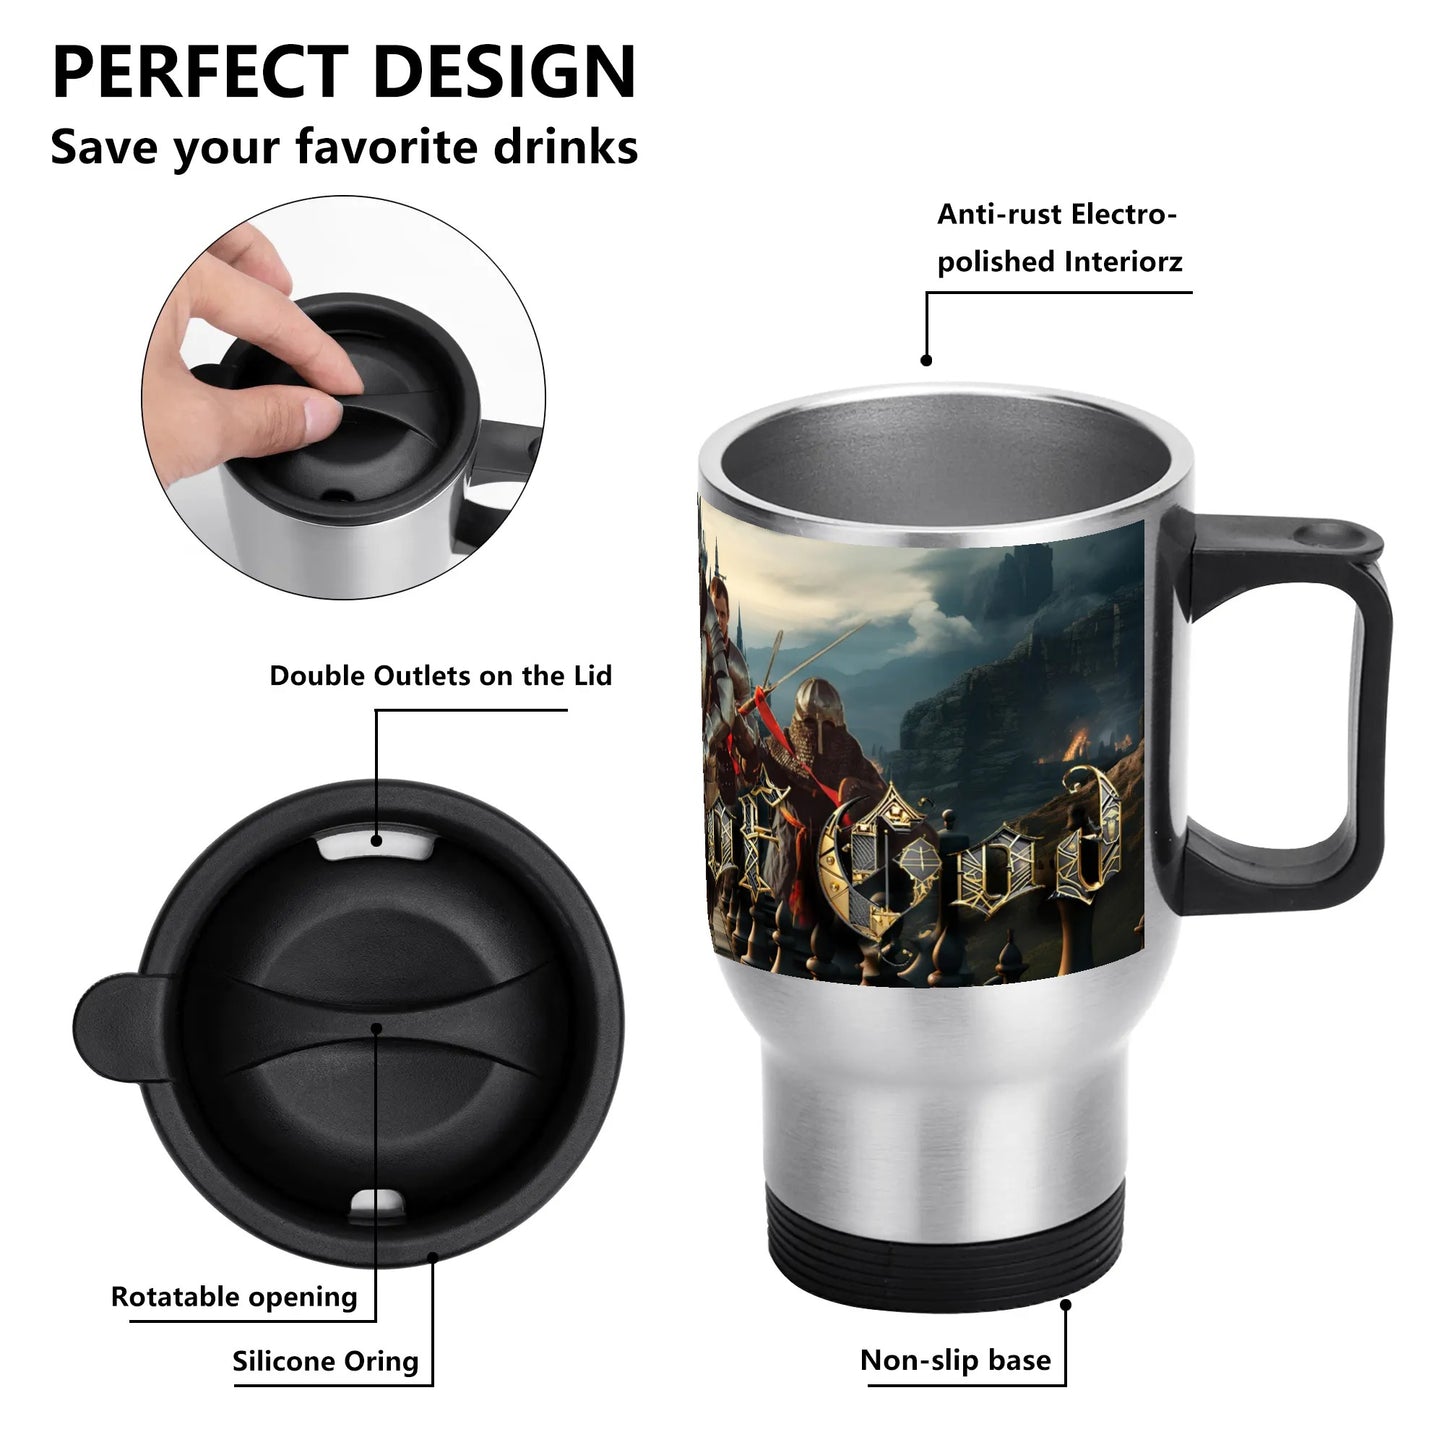 Armor of God- Stainless Steel Travel Coffee Mug (14 oz)